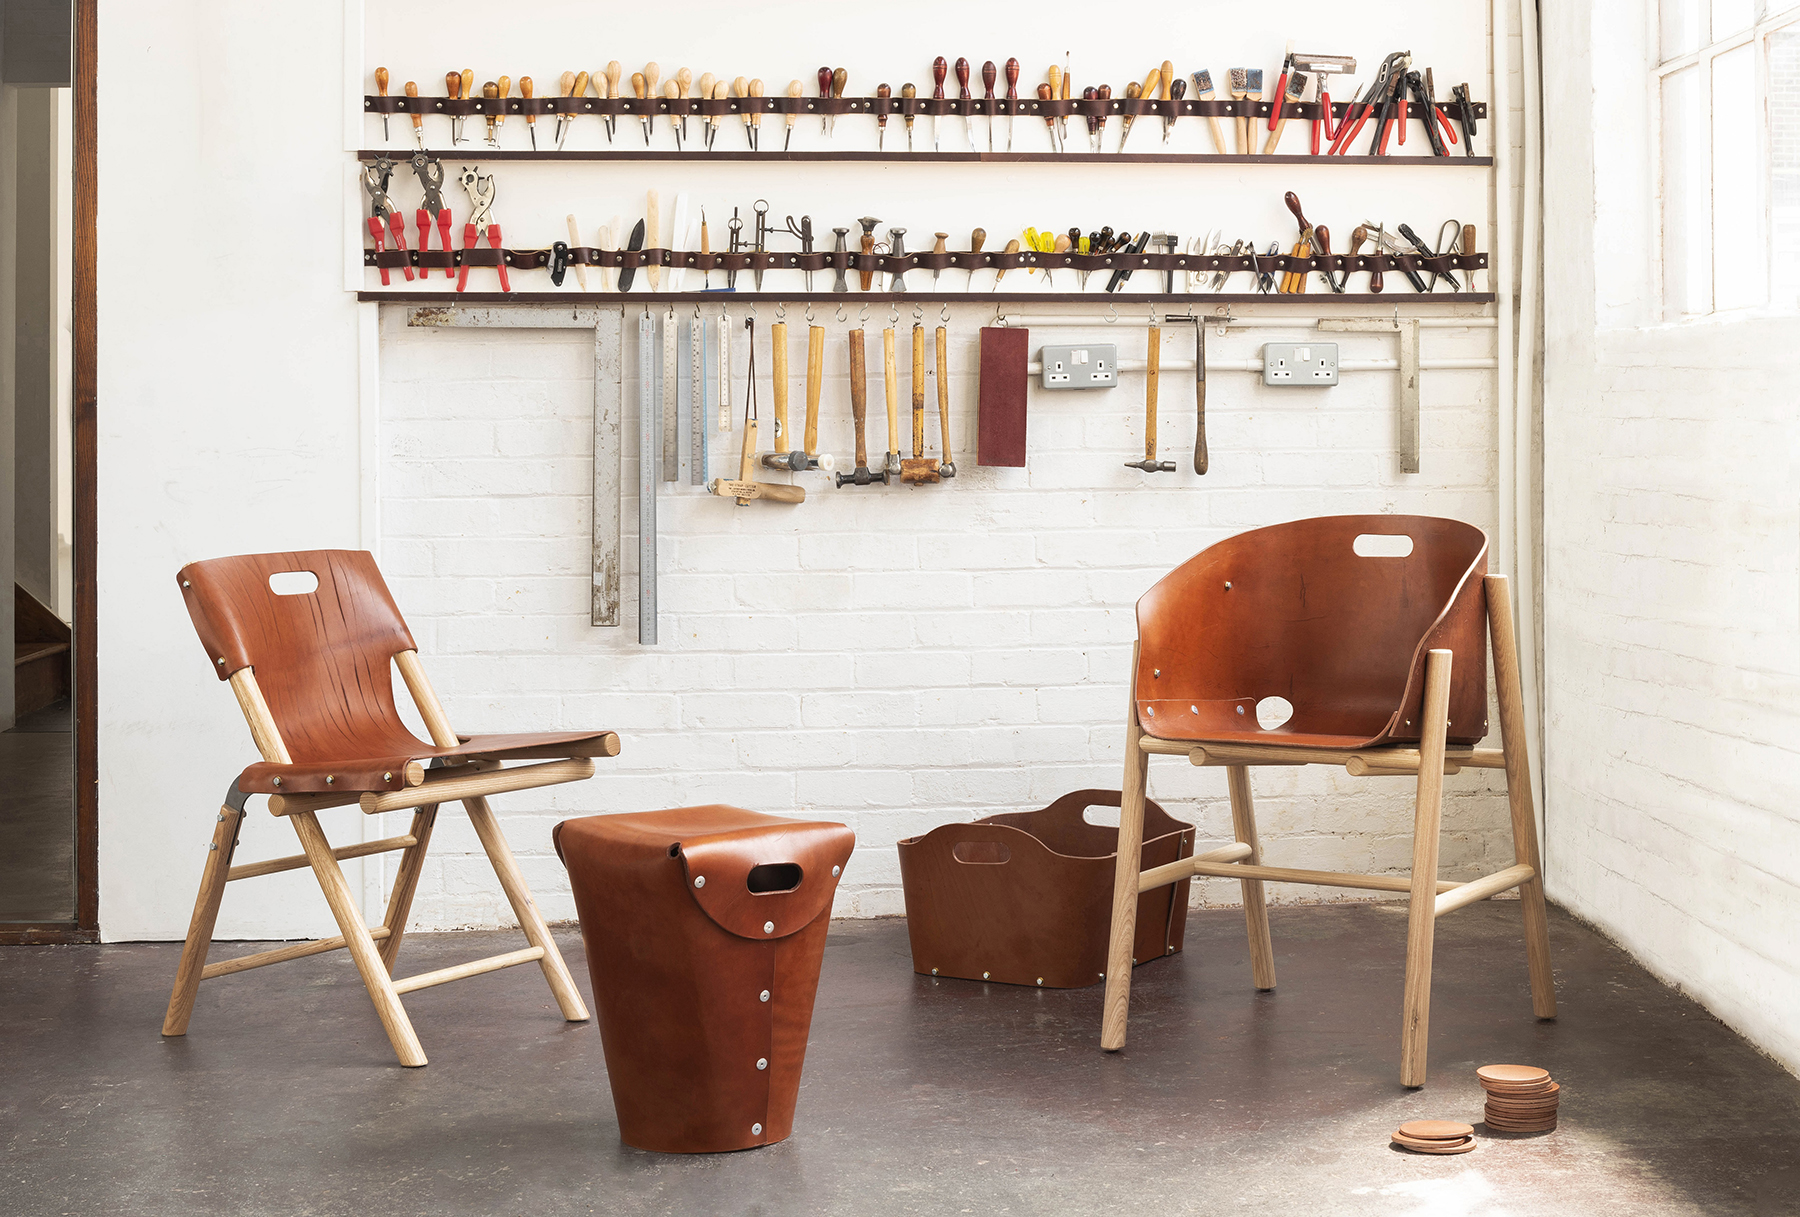 Studio Spotlight: The legacy of London-based Bill Amberg's fine leathercraft studio